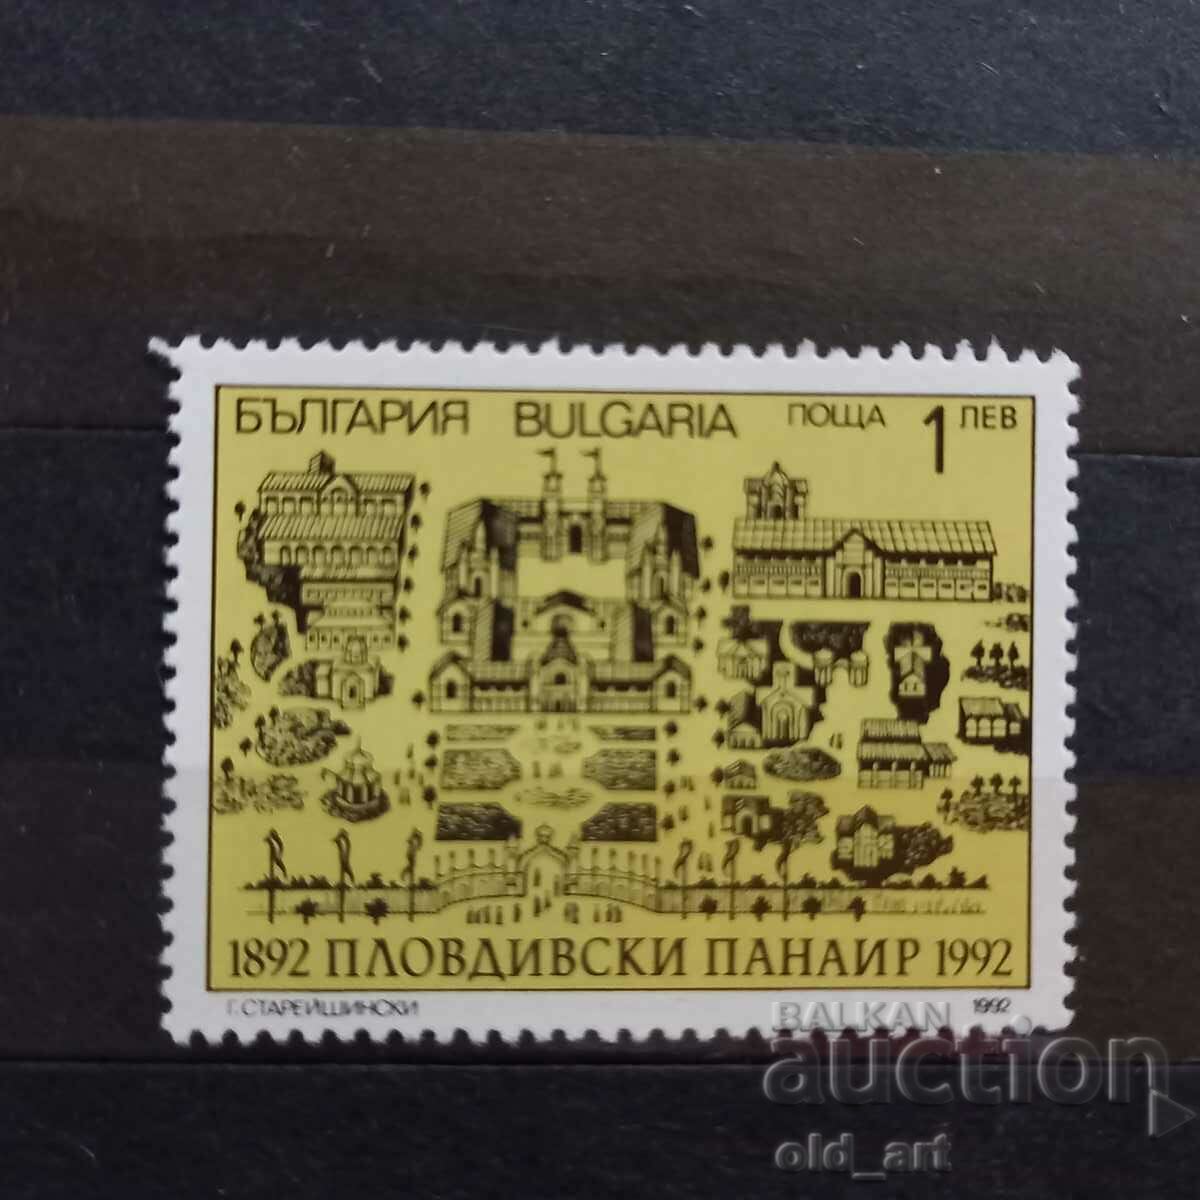 Timbre poștale - 100 de ani de Târgul Plovdiv